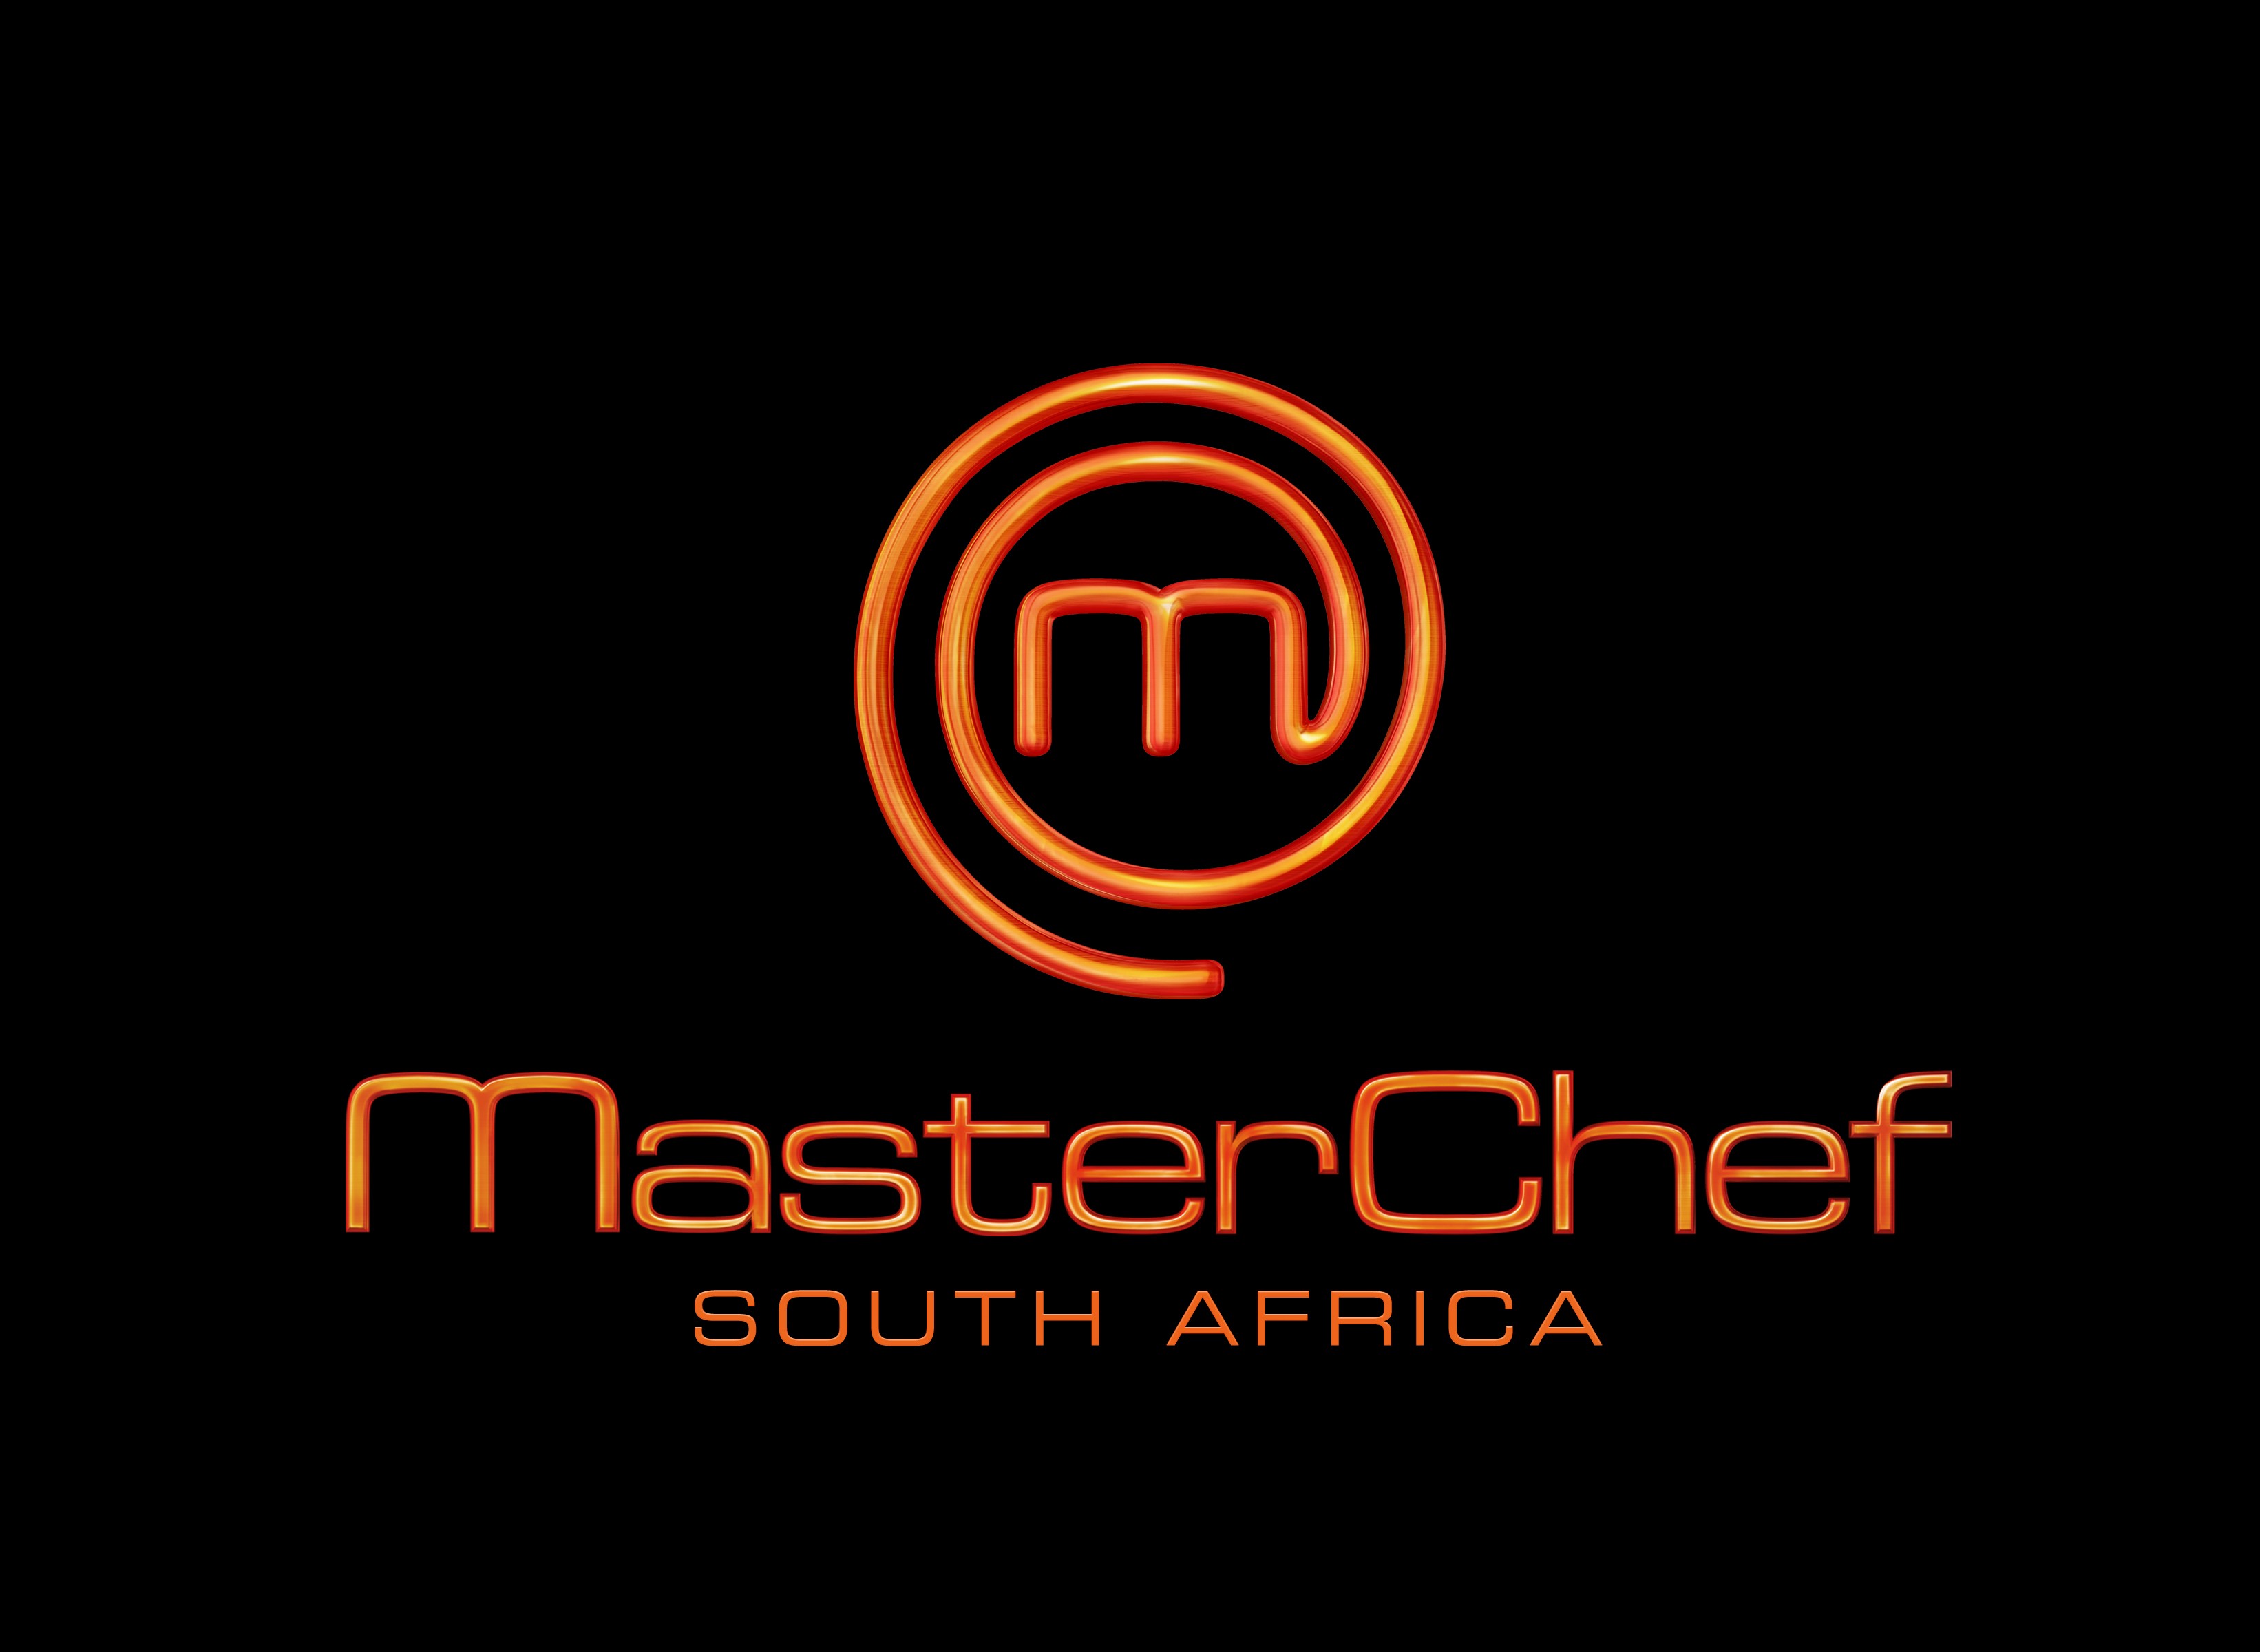 Masterchef South Africa